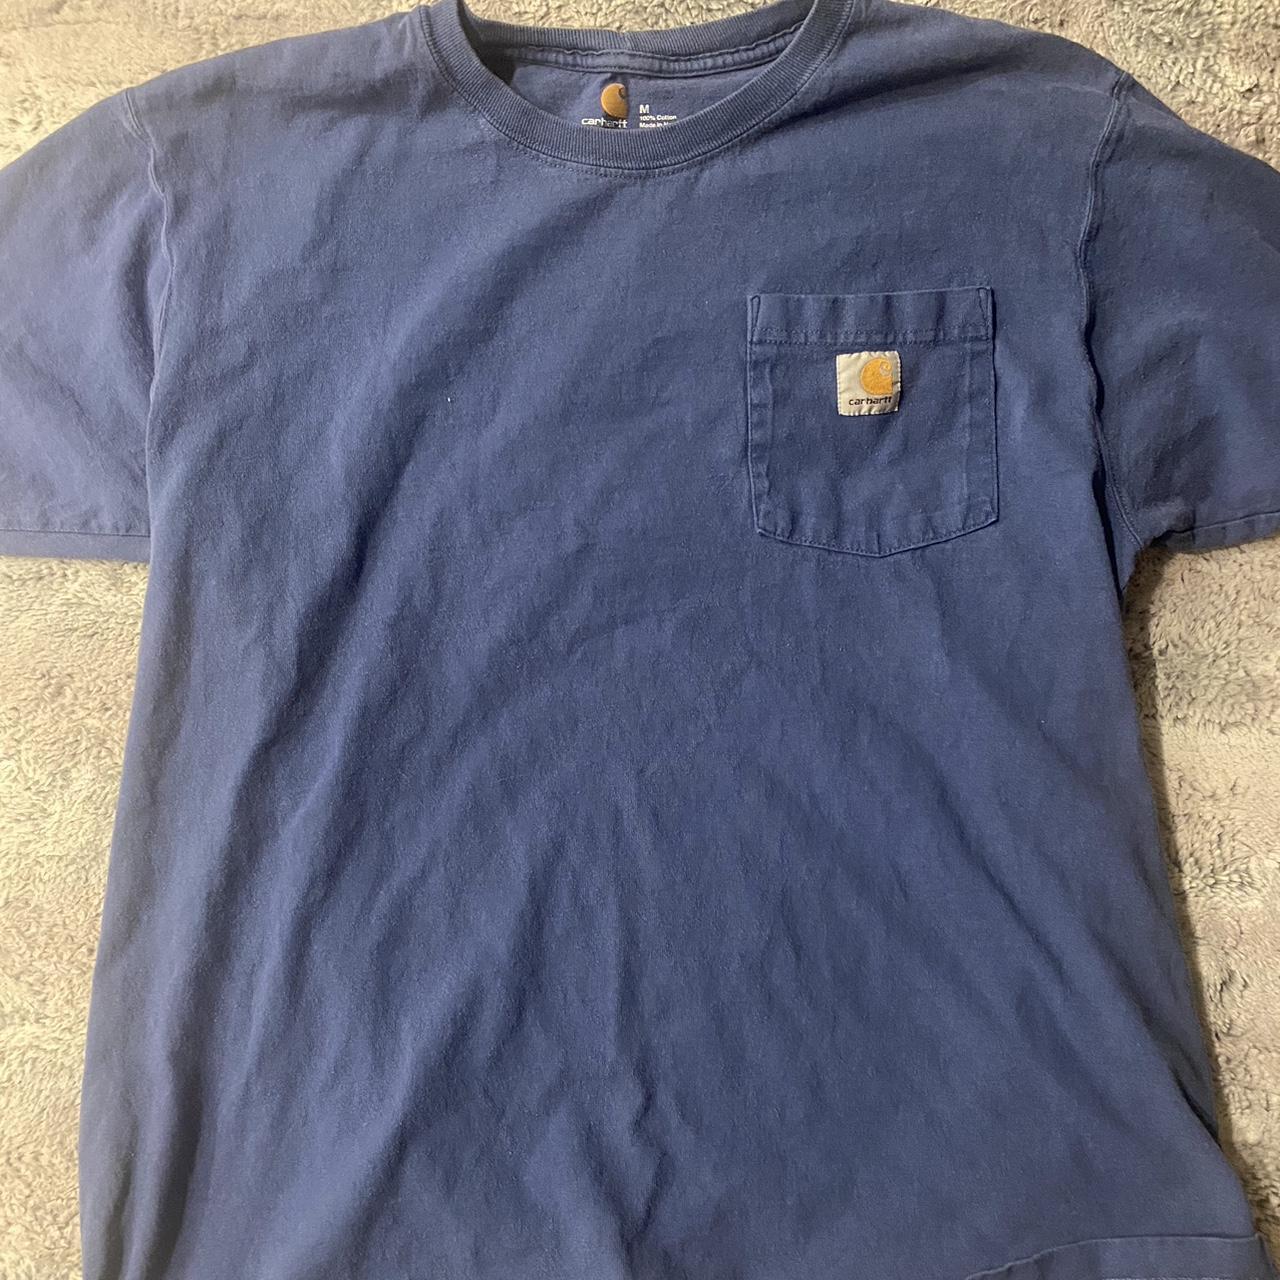 Carhart blue t shirt amazing condition size medium - Depop